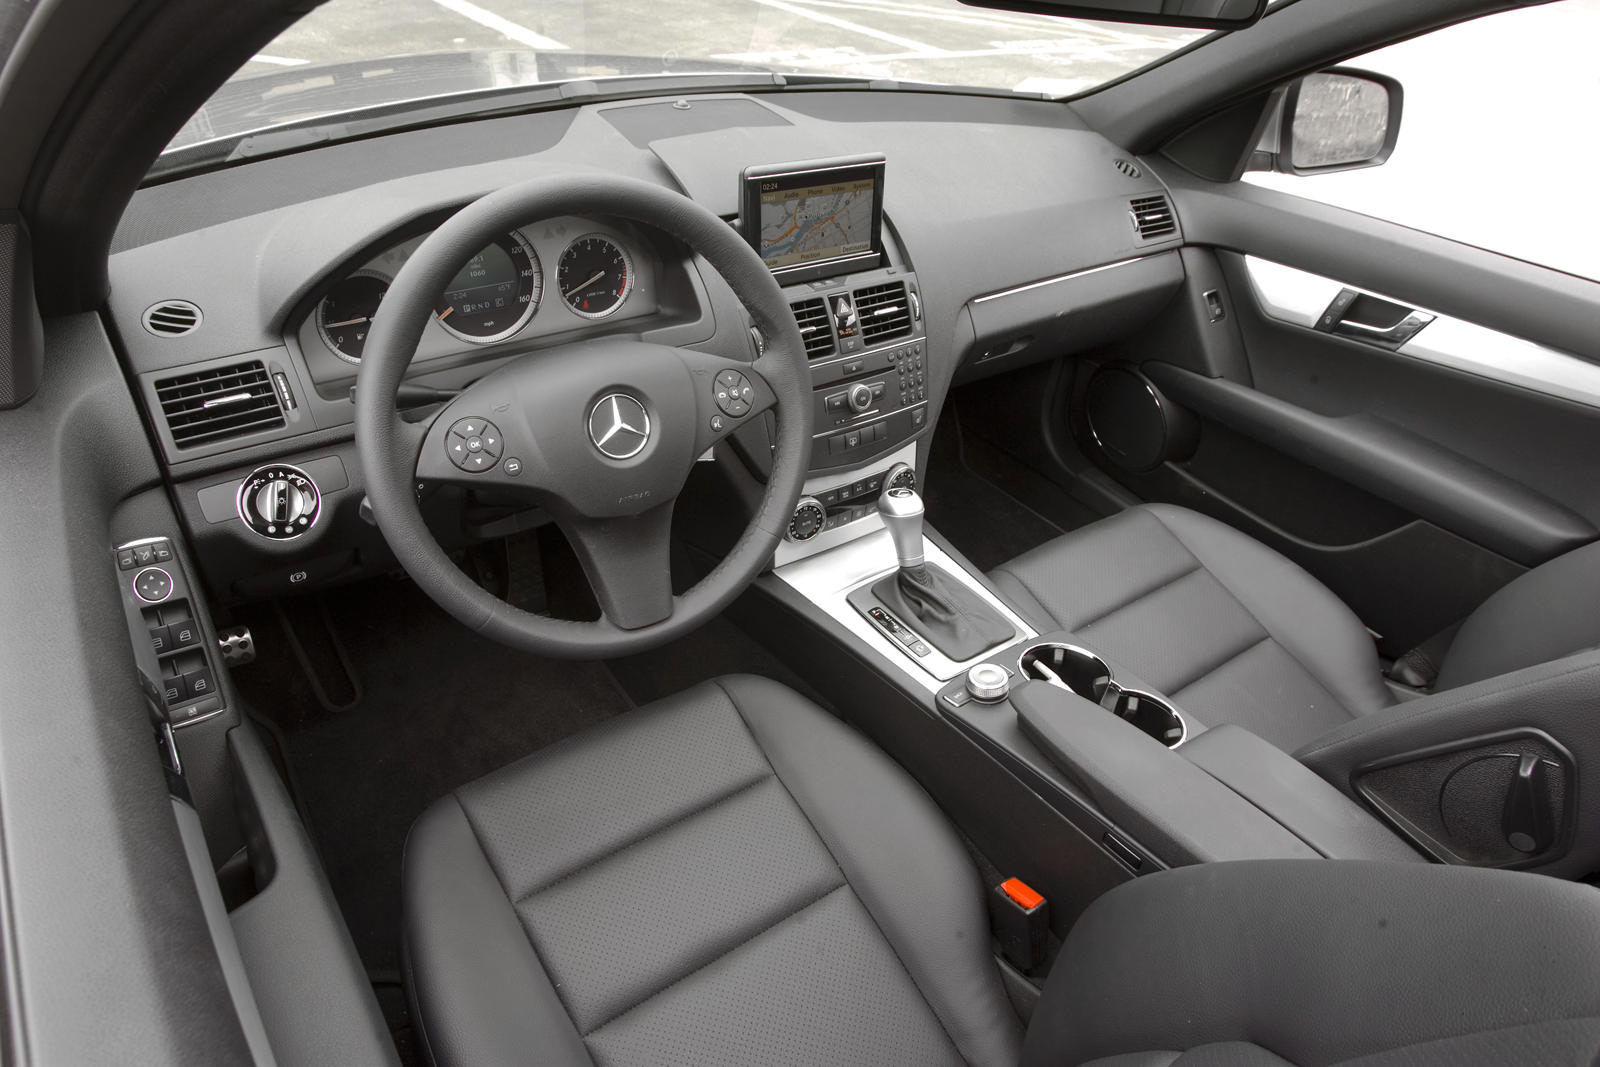 2009 Mercedes-Benz C-Class Sedan Dashboard